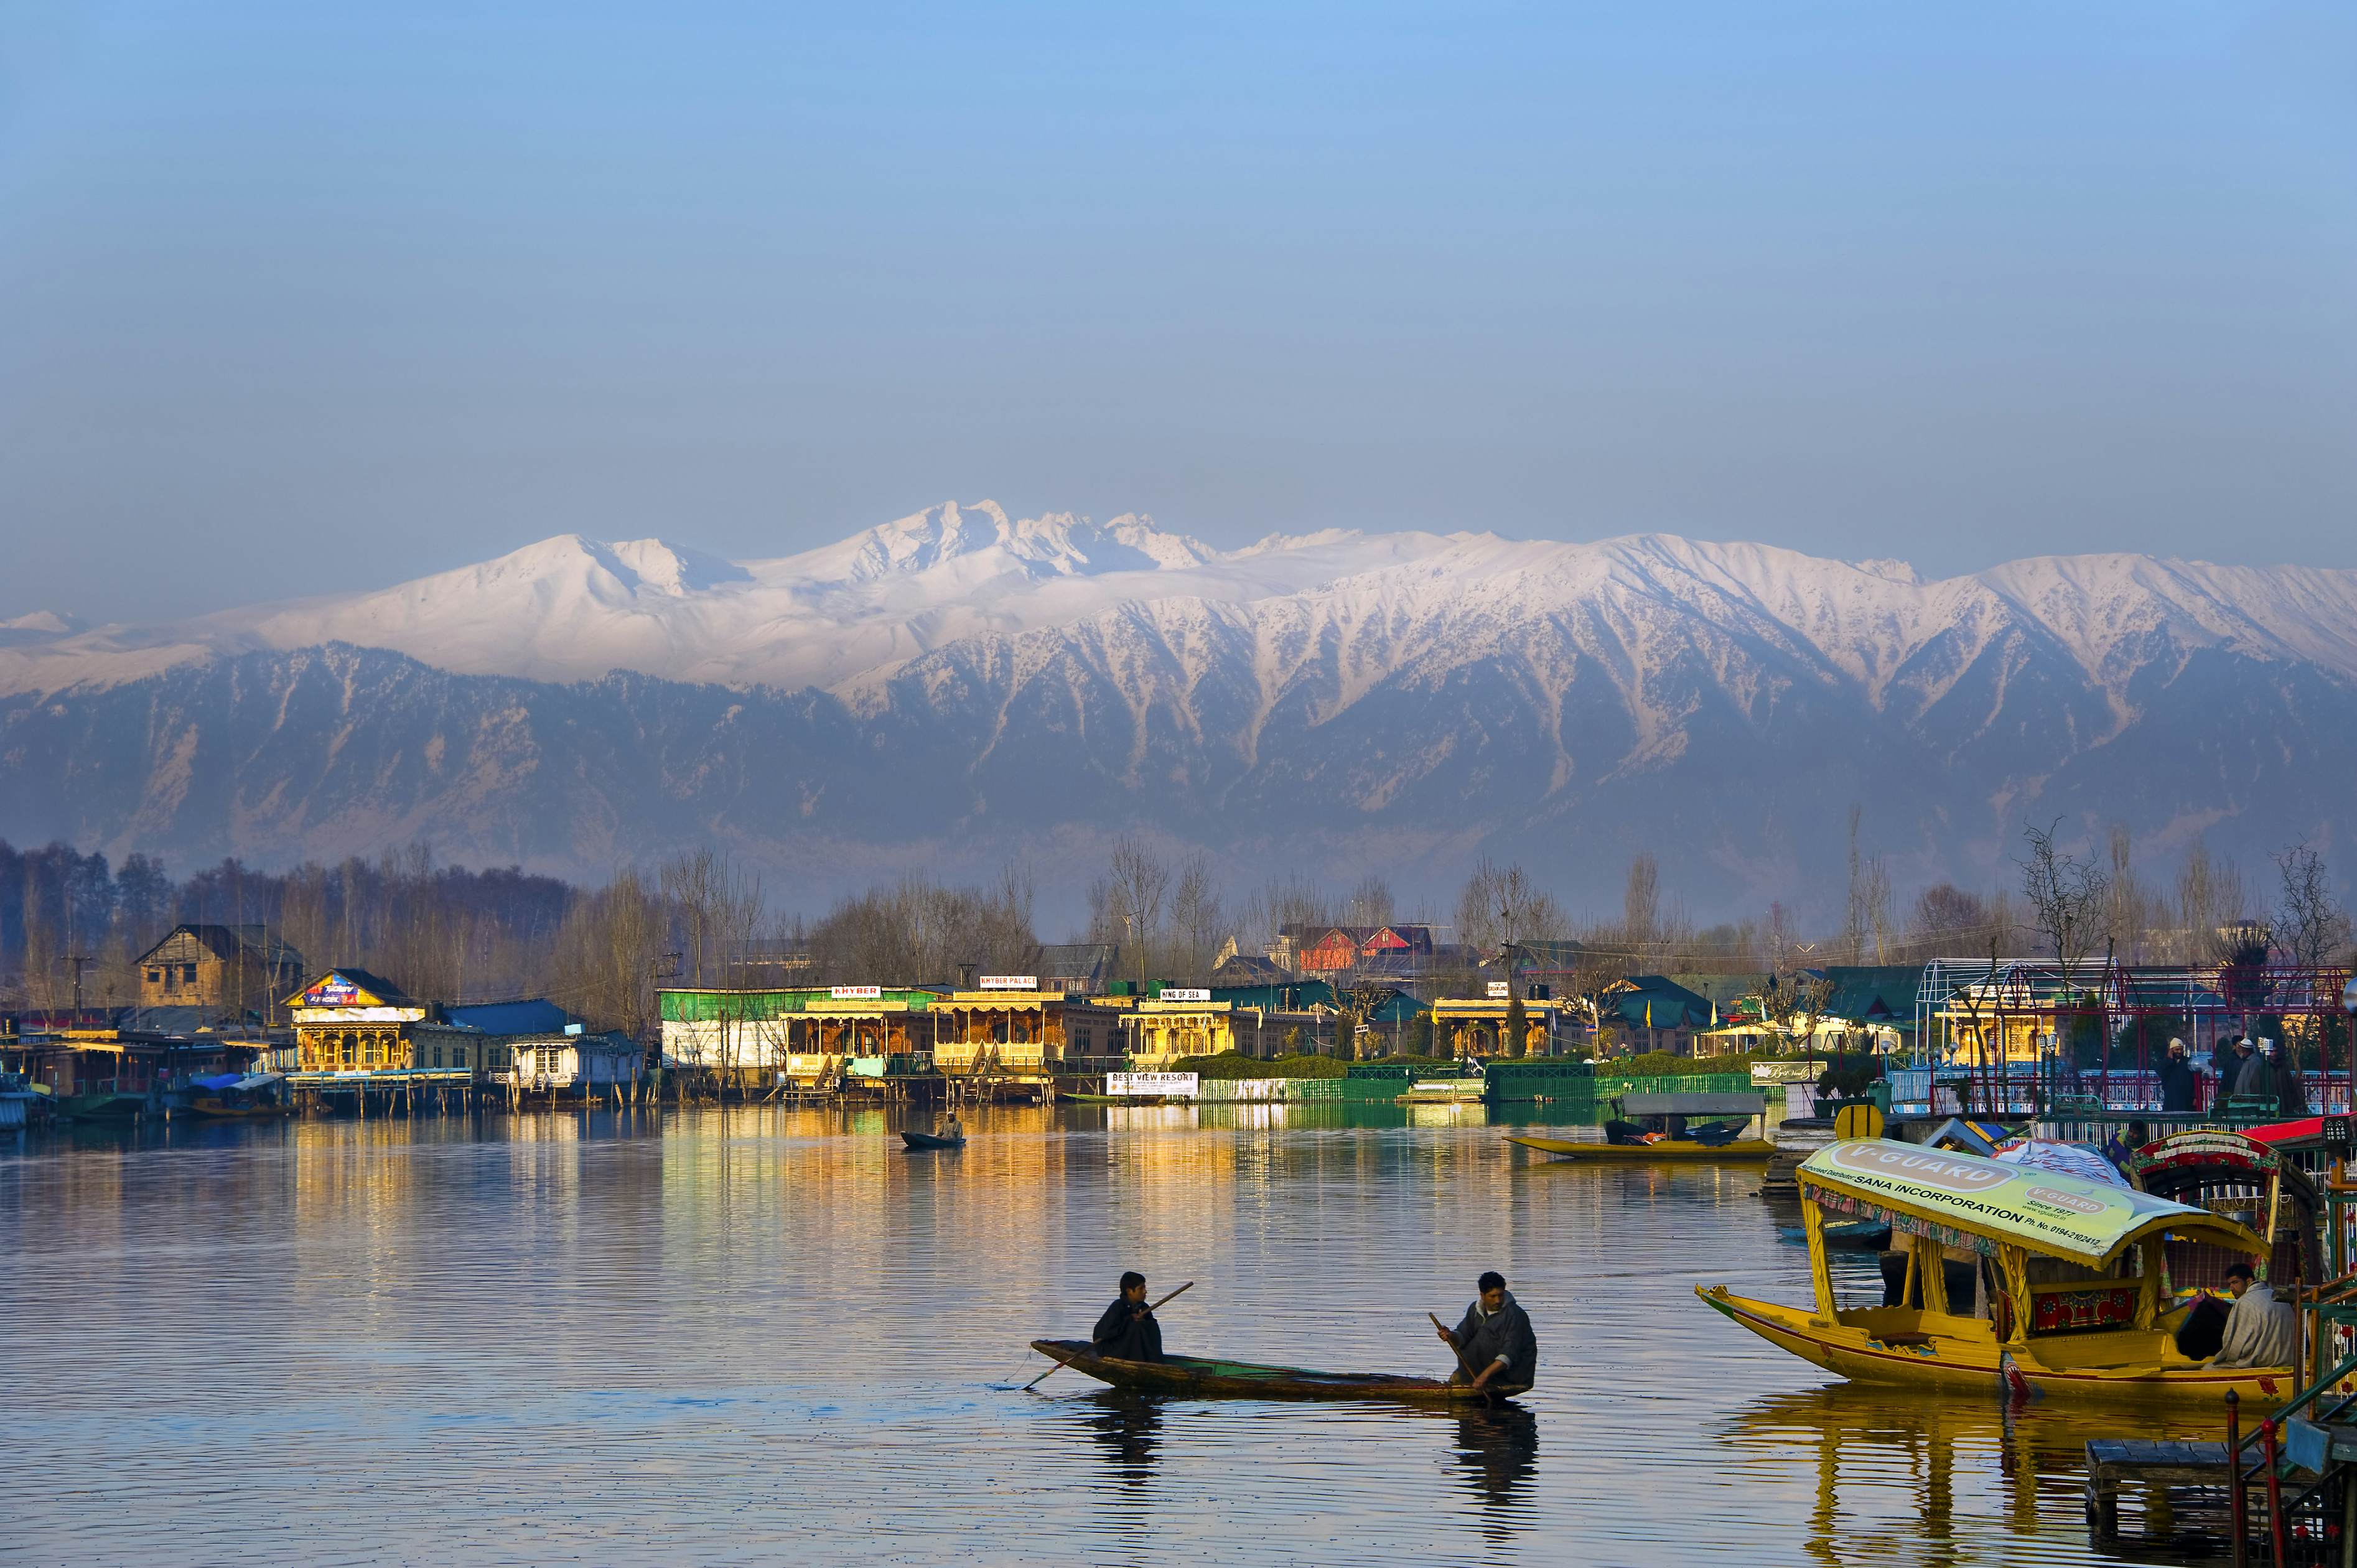 Kashmir & Ladakh travel - Lonely Planet | India, Asia